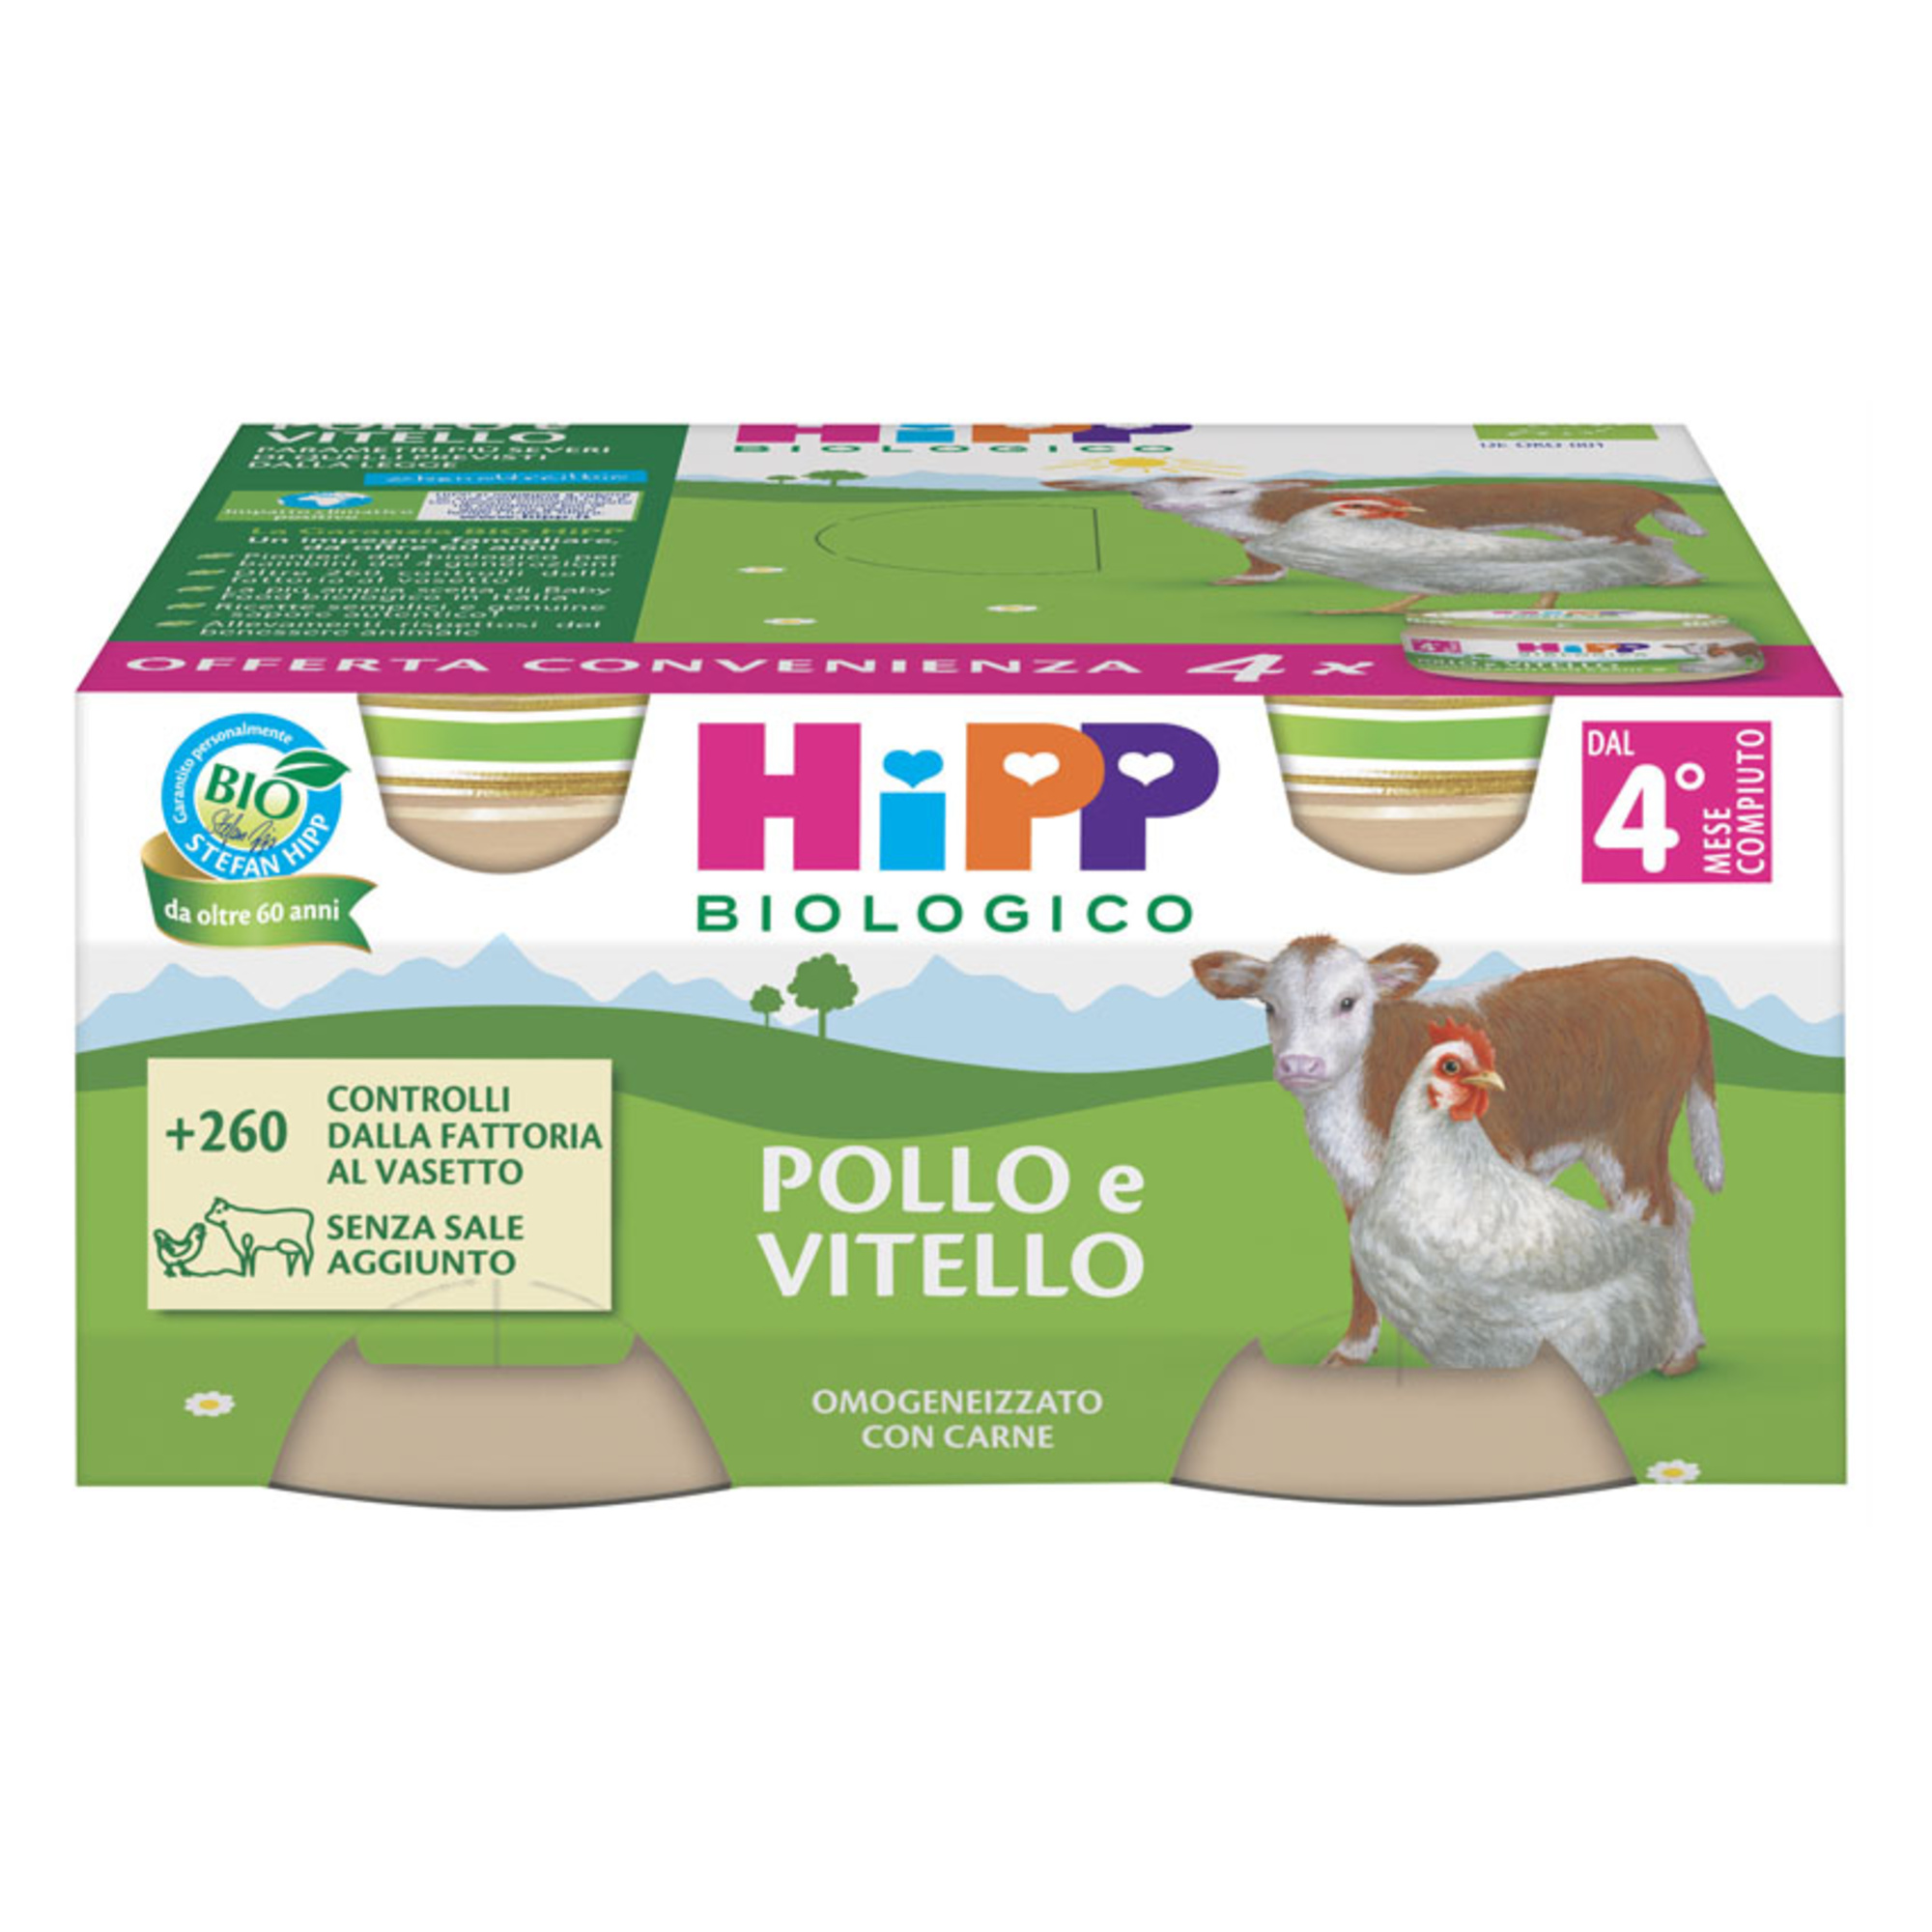 Hipp omogeneizzato pollo e vitello 4x80g - Hipp Baby